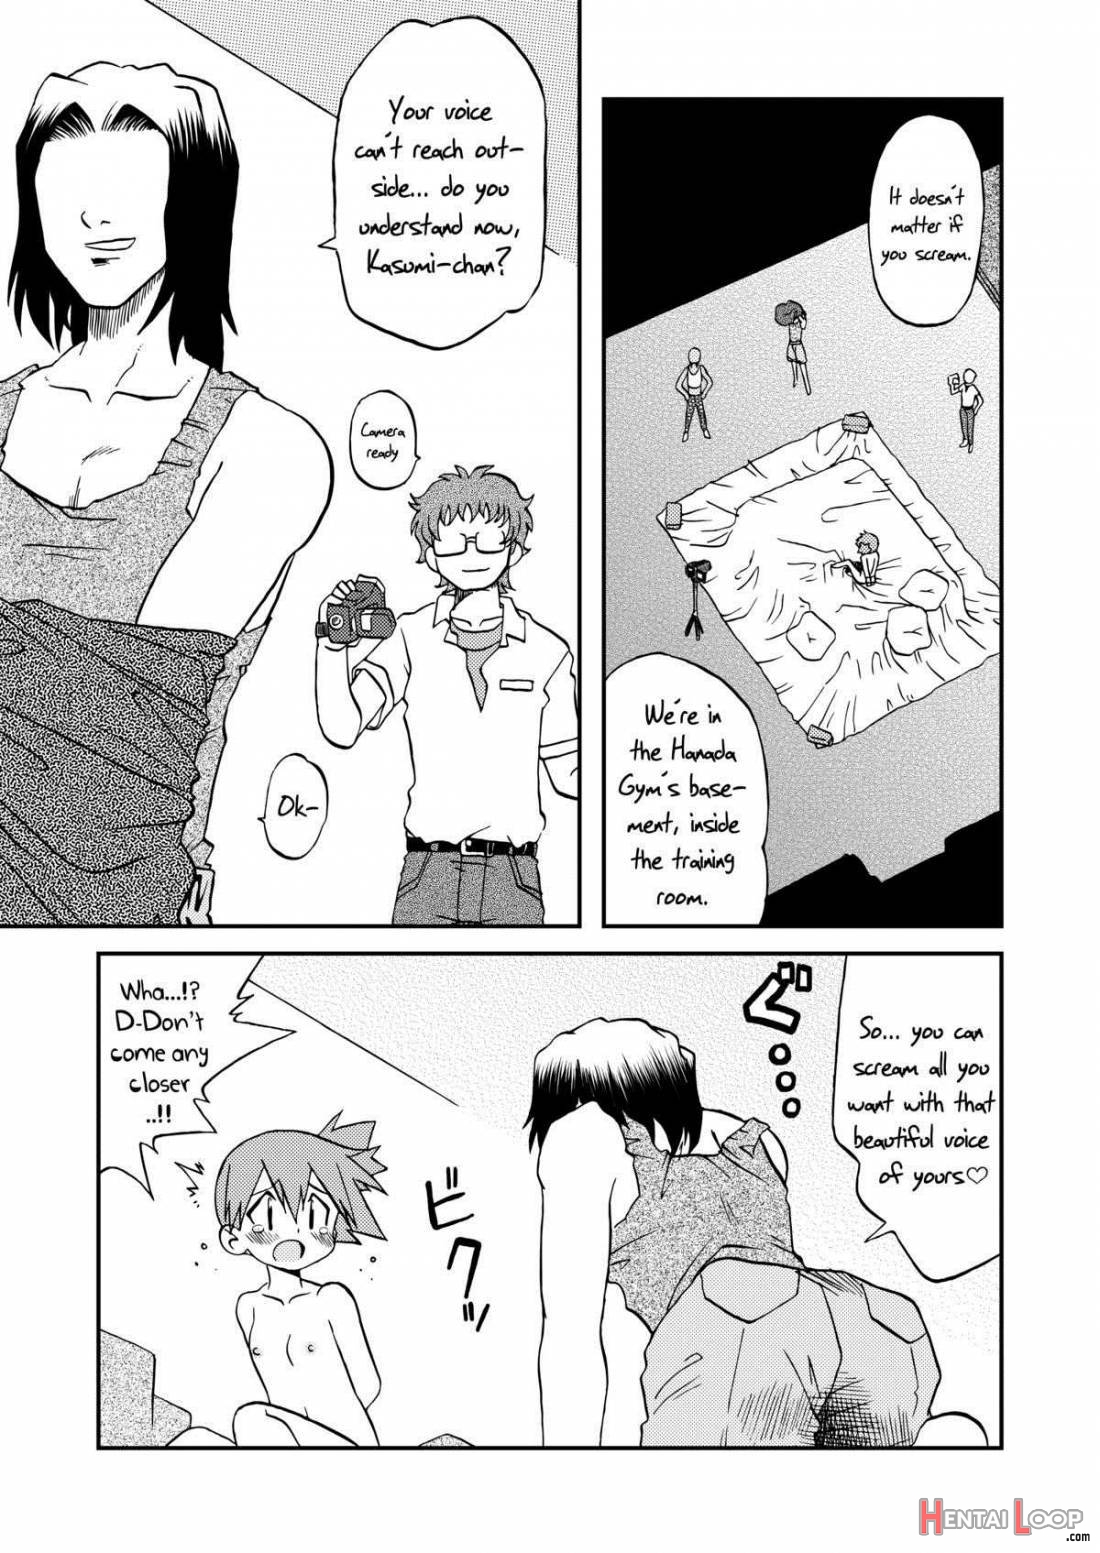 Sentehisshou Yudantaiteki page 9